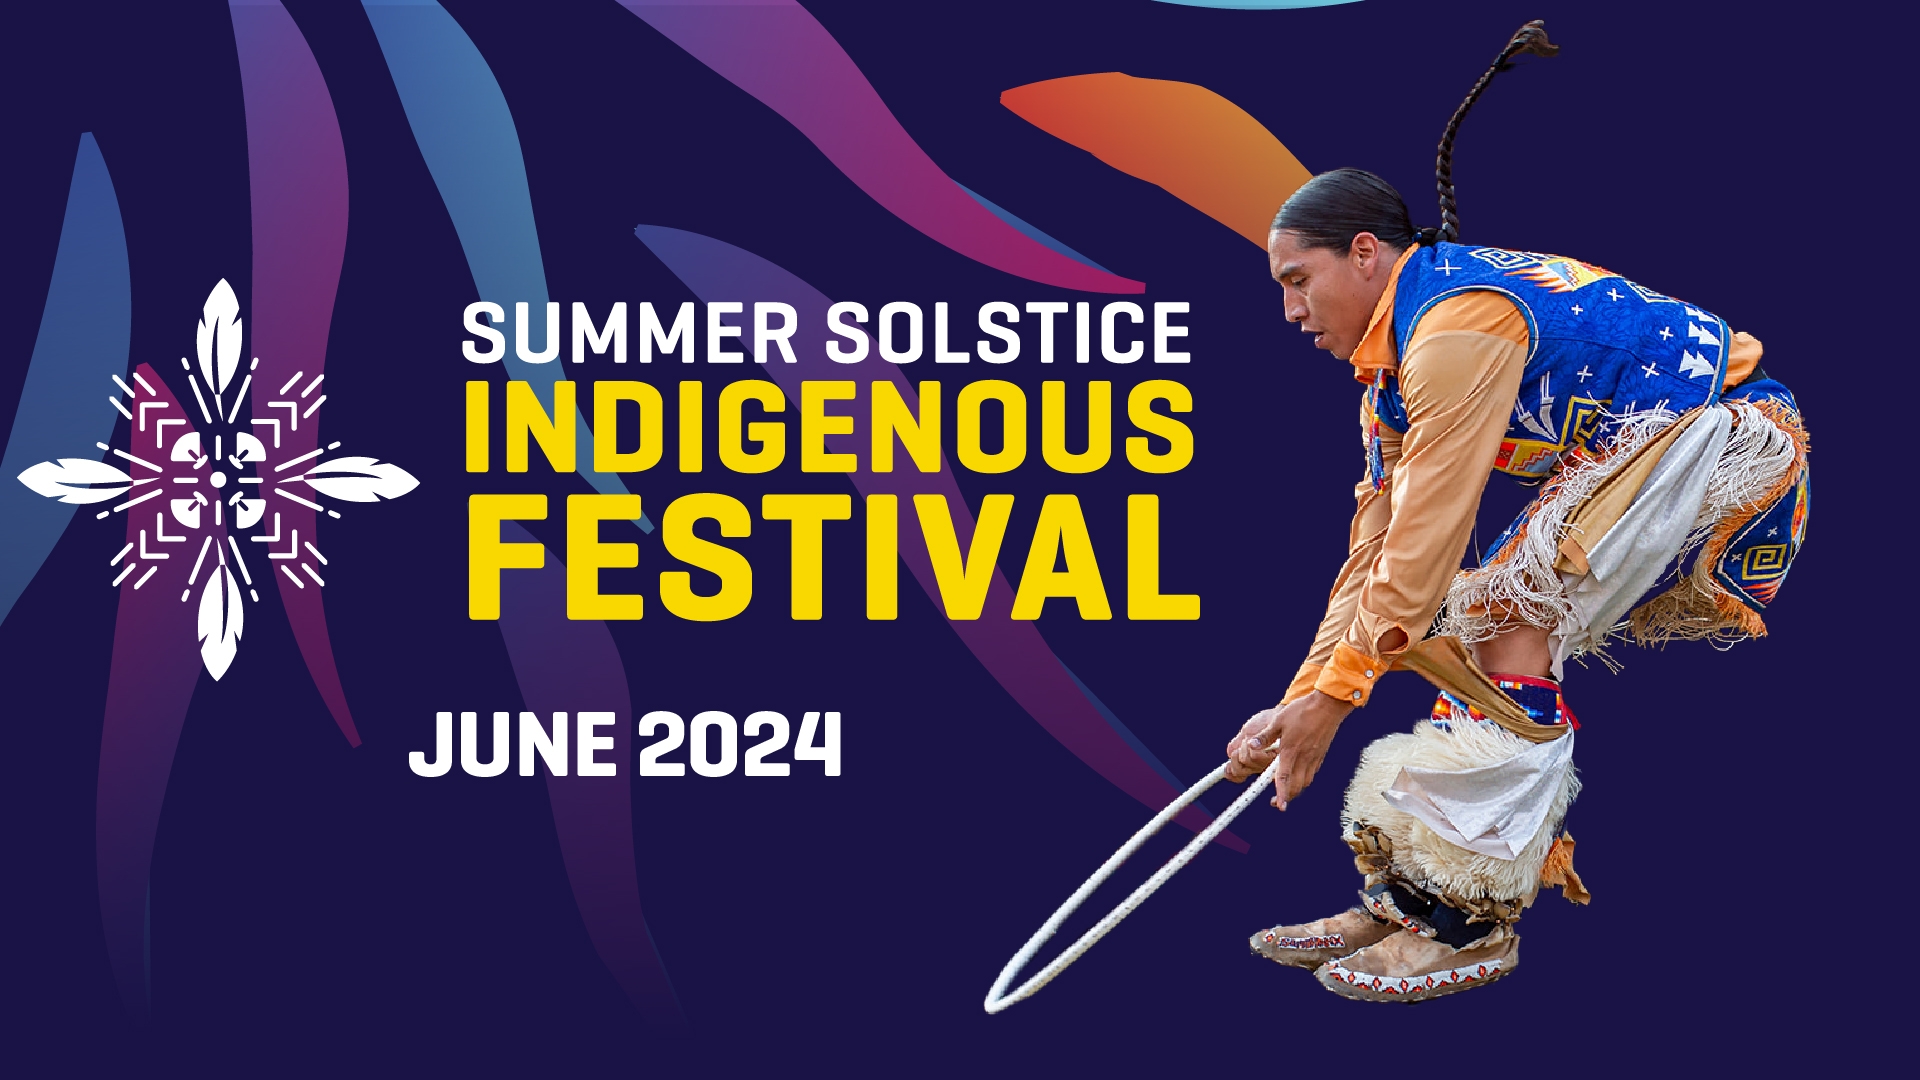 Summer Solstice Indigenous Festival poster